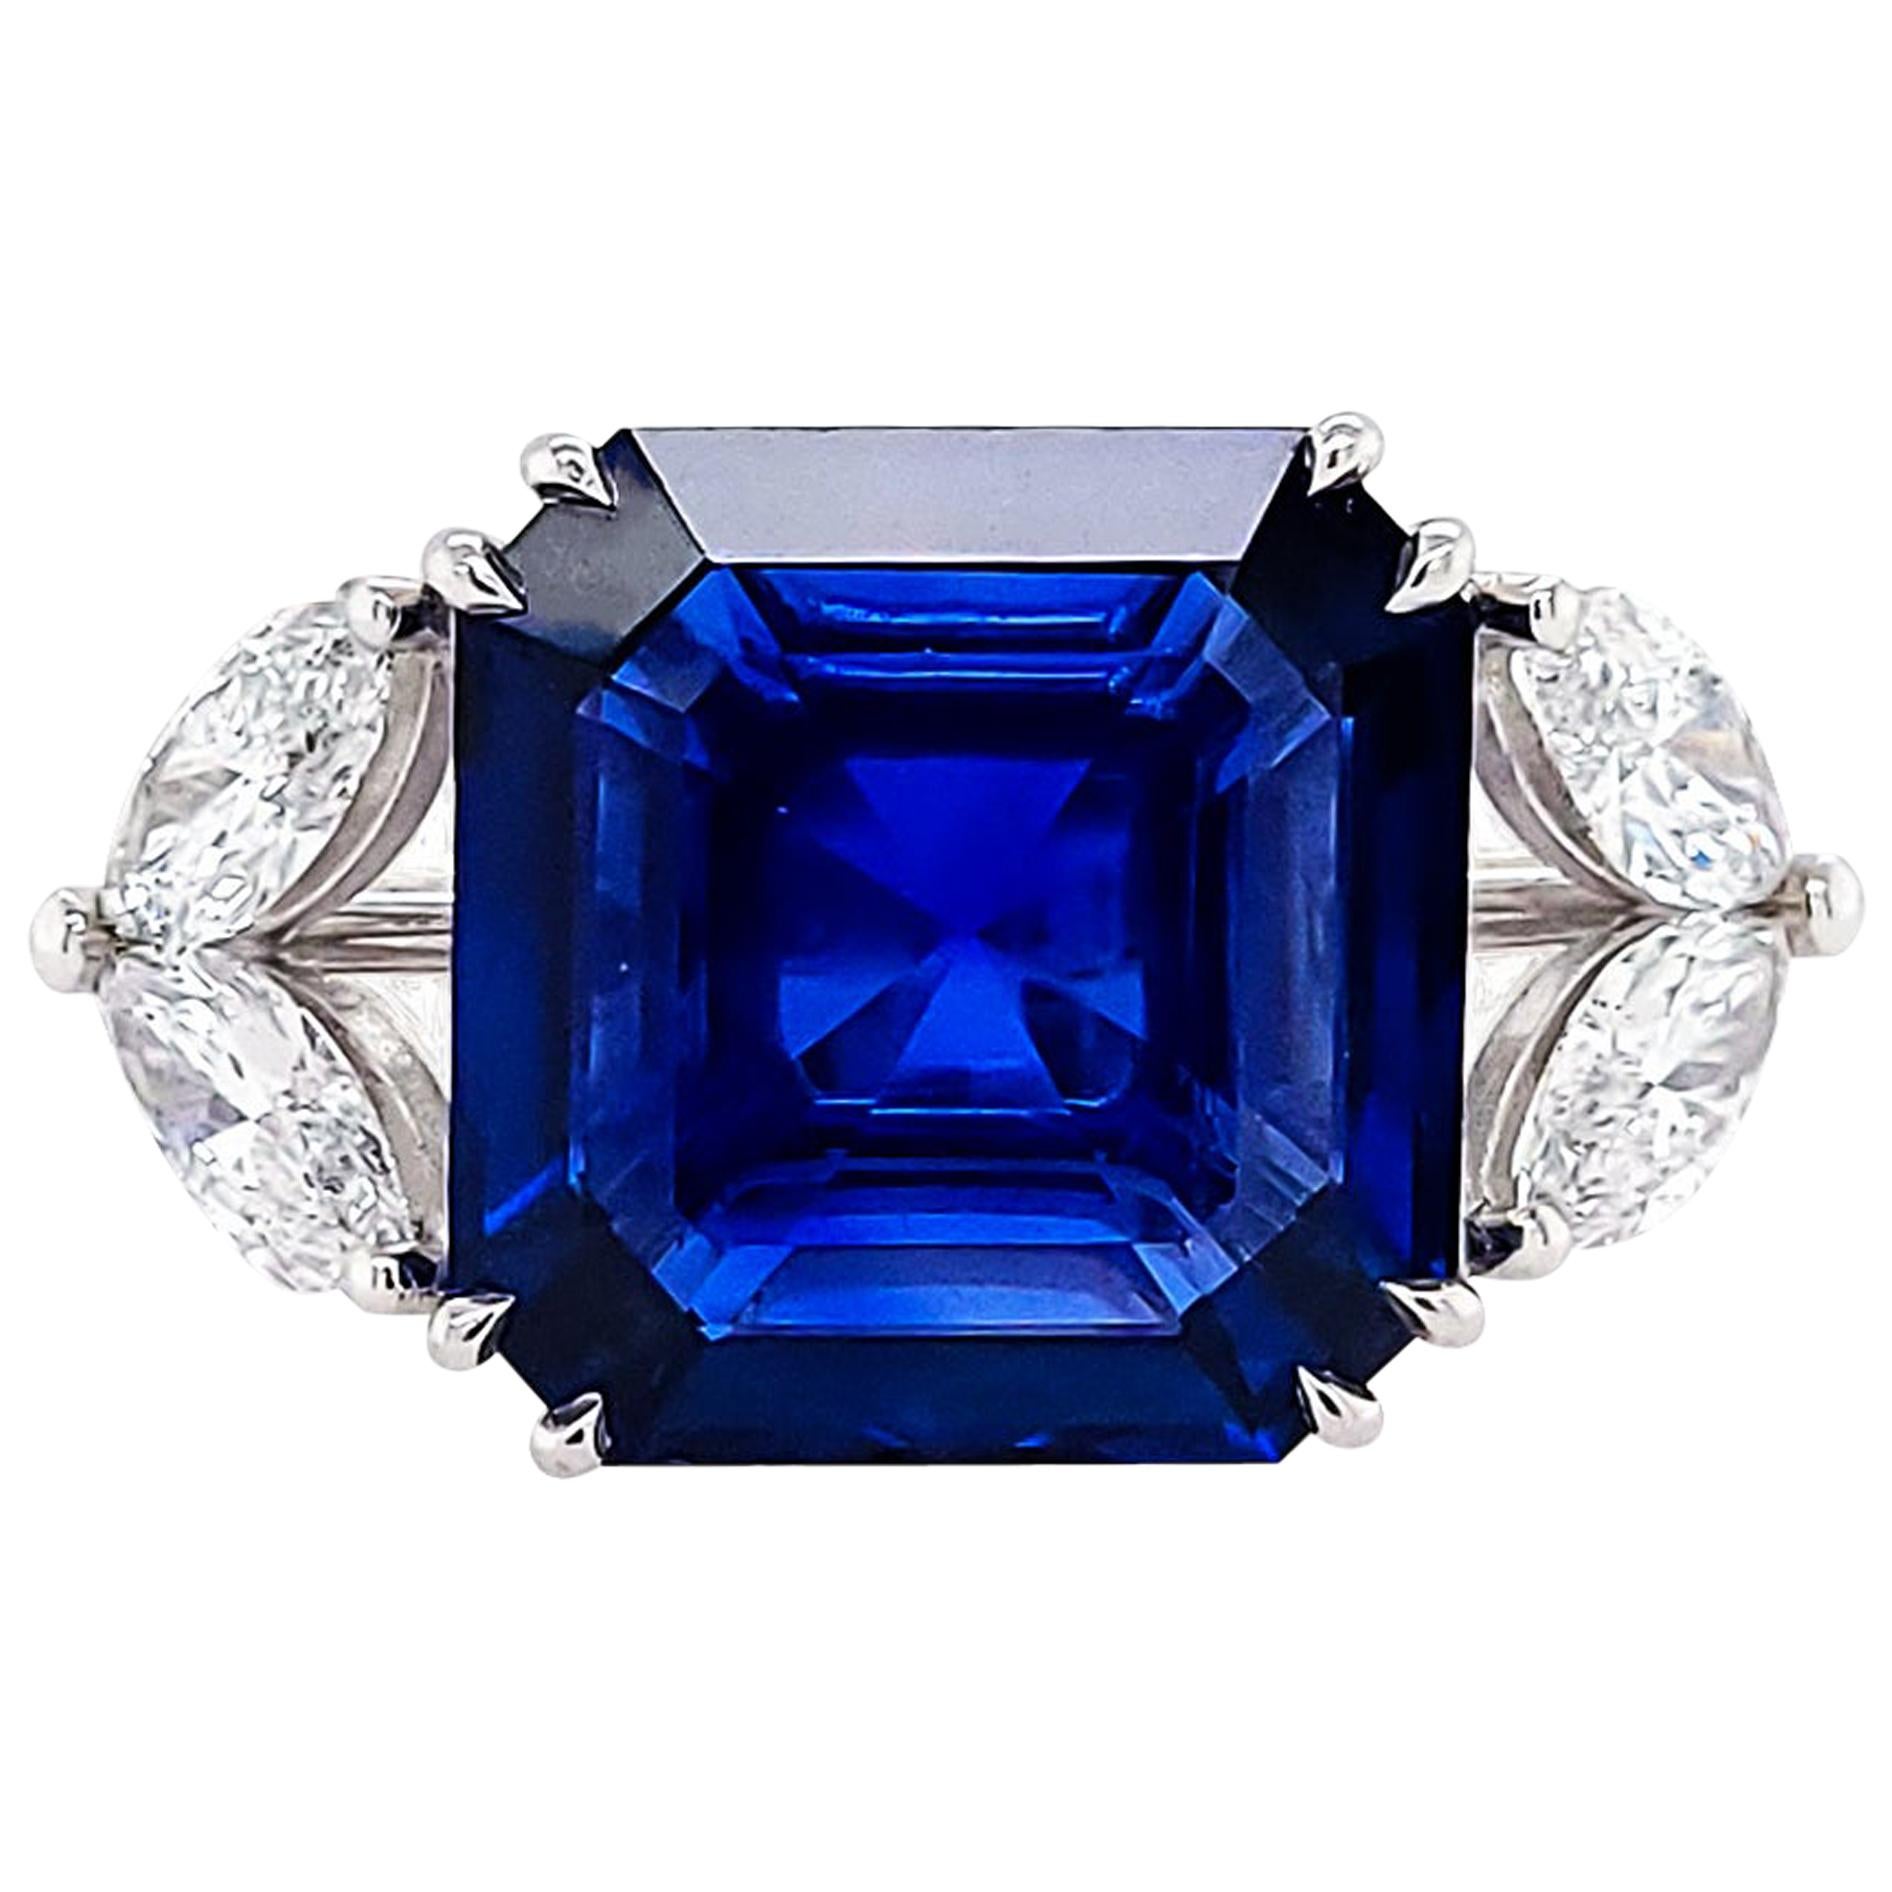 Spectra Fine Jewelry SSEF Certified 10 Carat Burma Sapphire Diamond Ring For Sale